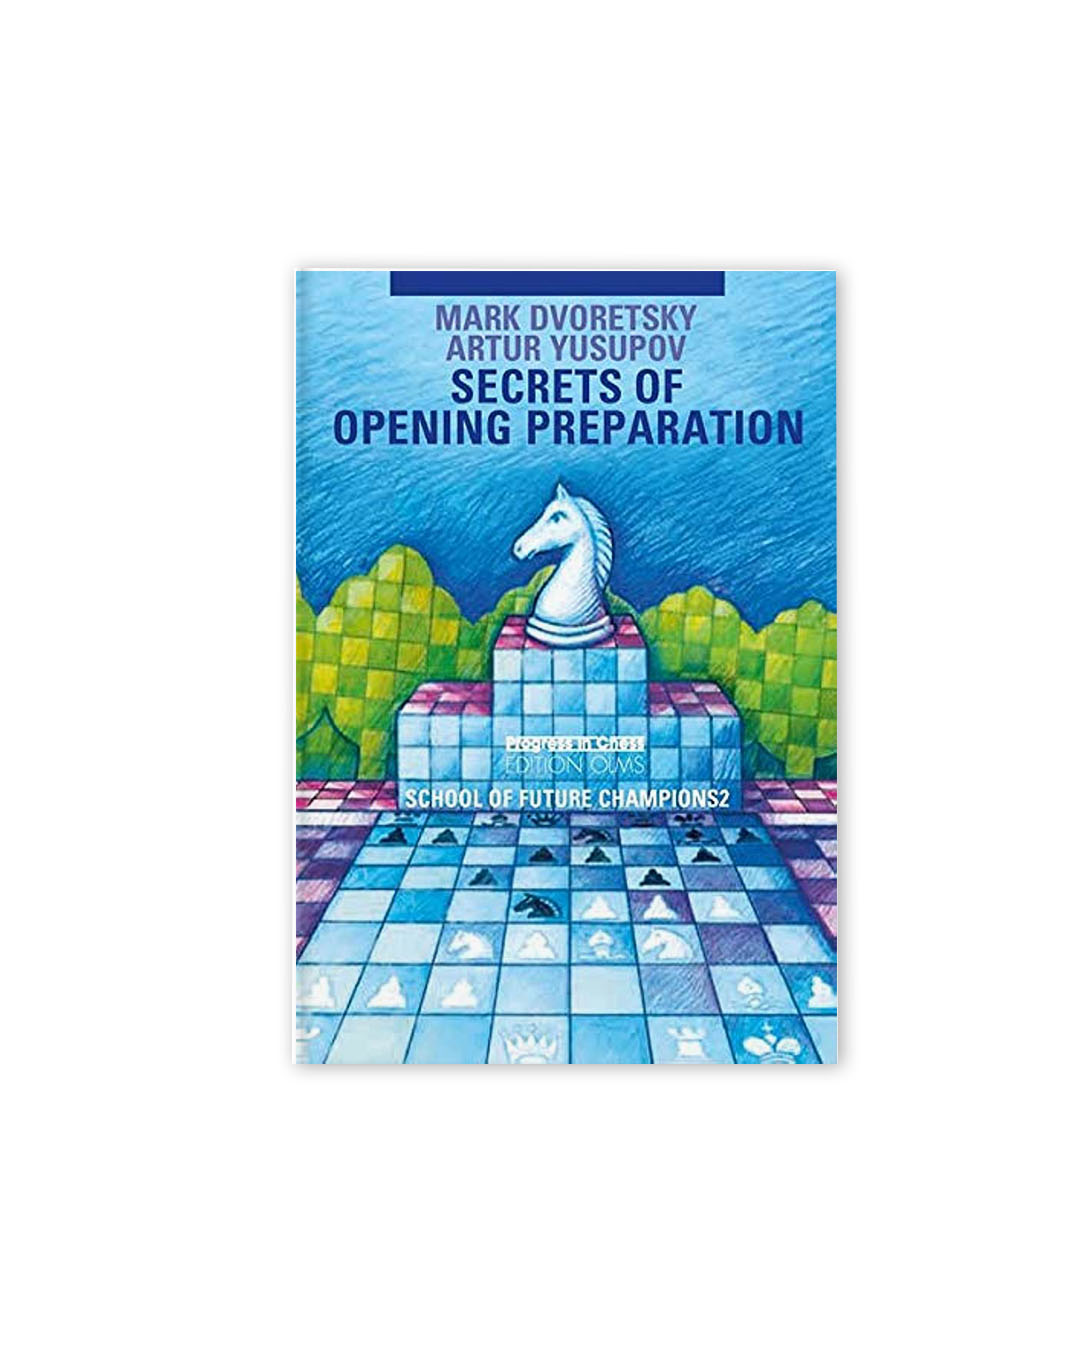 School of Future Champions 2 - Secrets of Opening Preparation (libro en inglés) - Dvoretsky / Yusupov